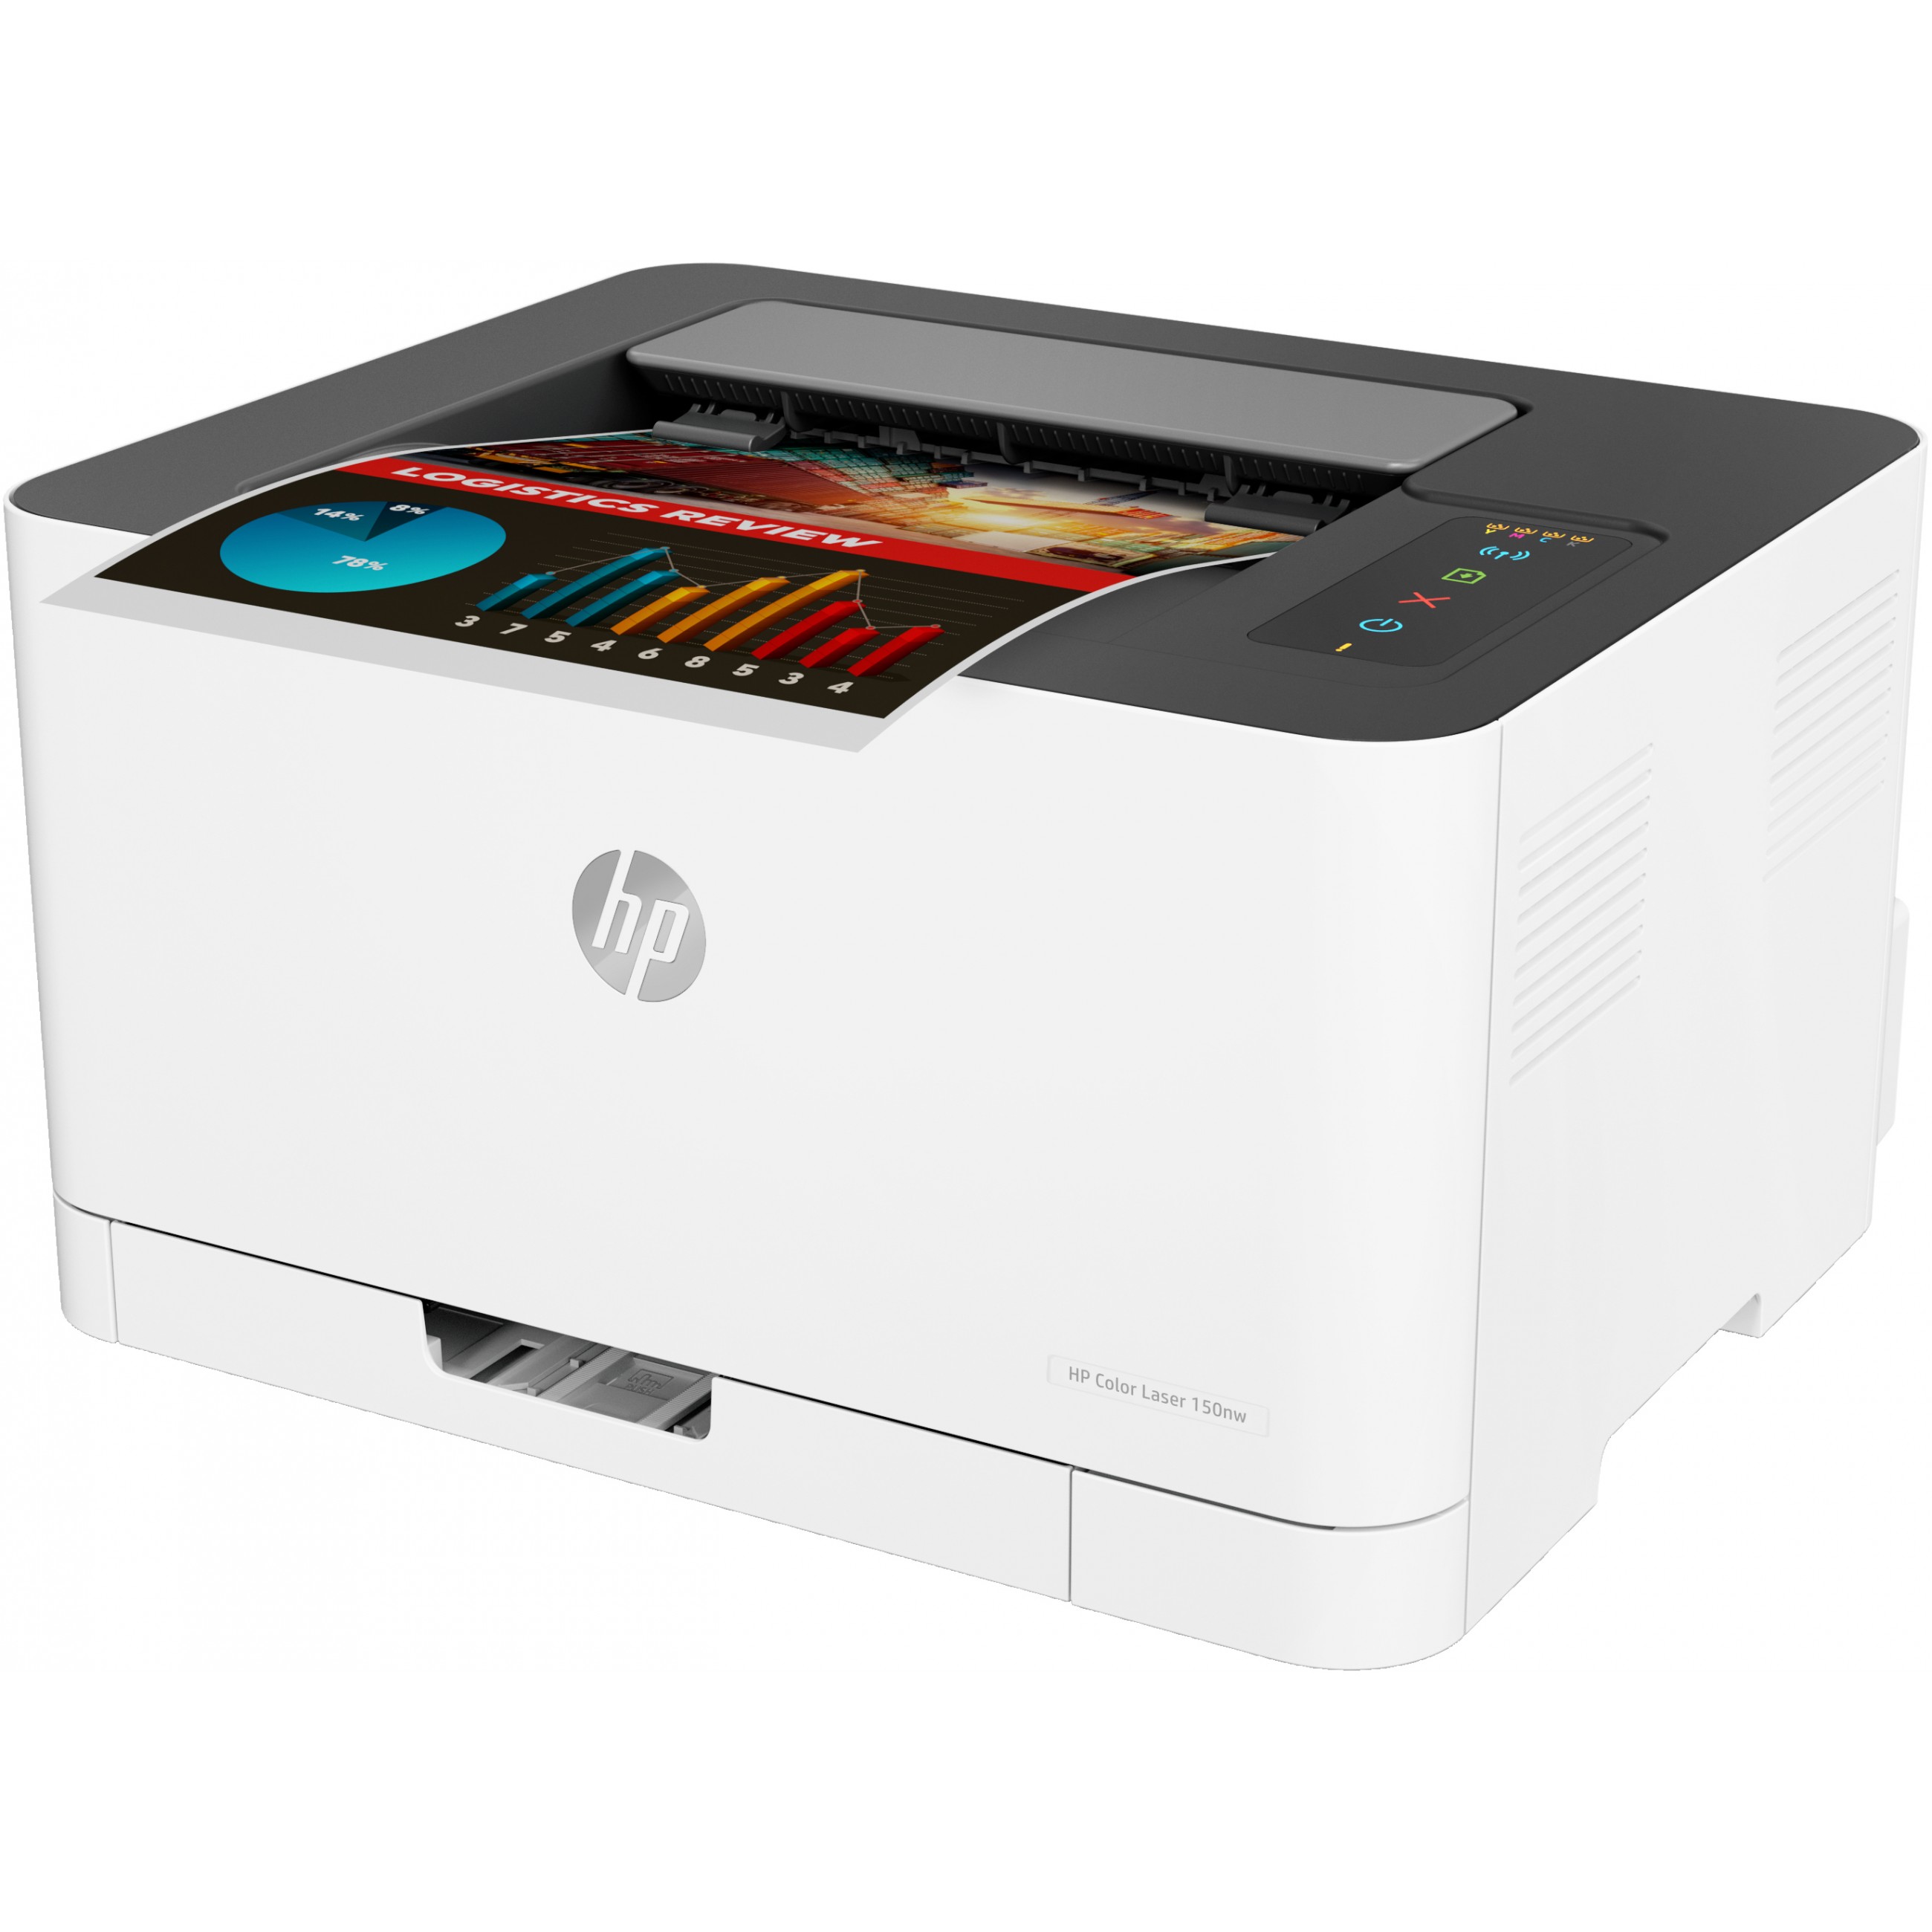 HP 4ZB95A#B19, Drucker, HP Color Laser 150nw  (BILD3)